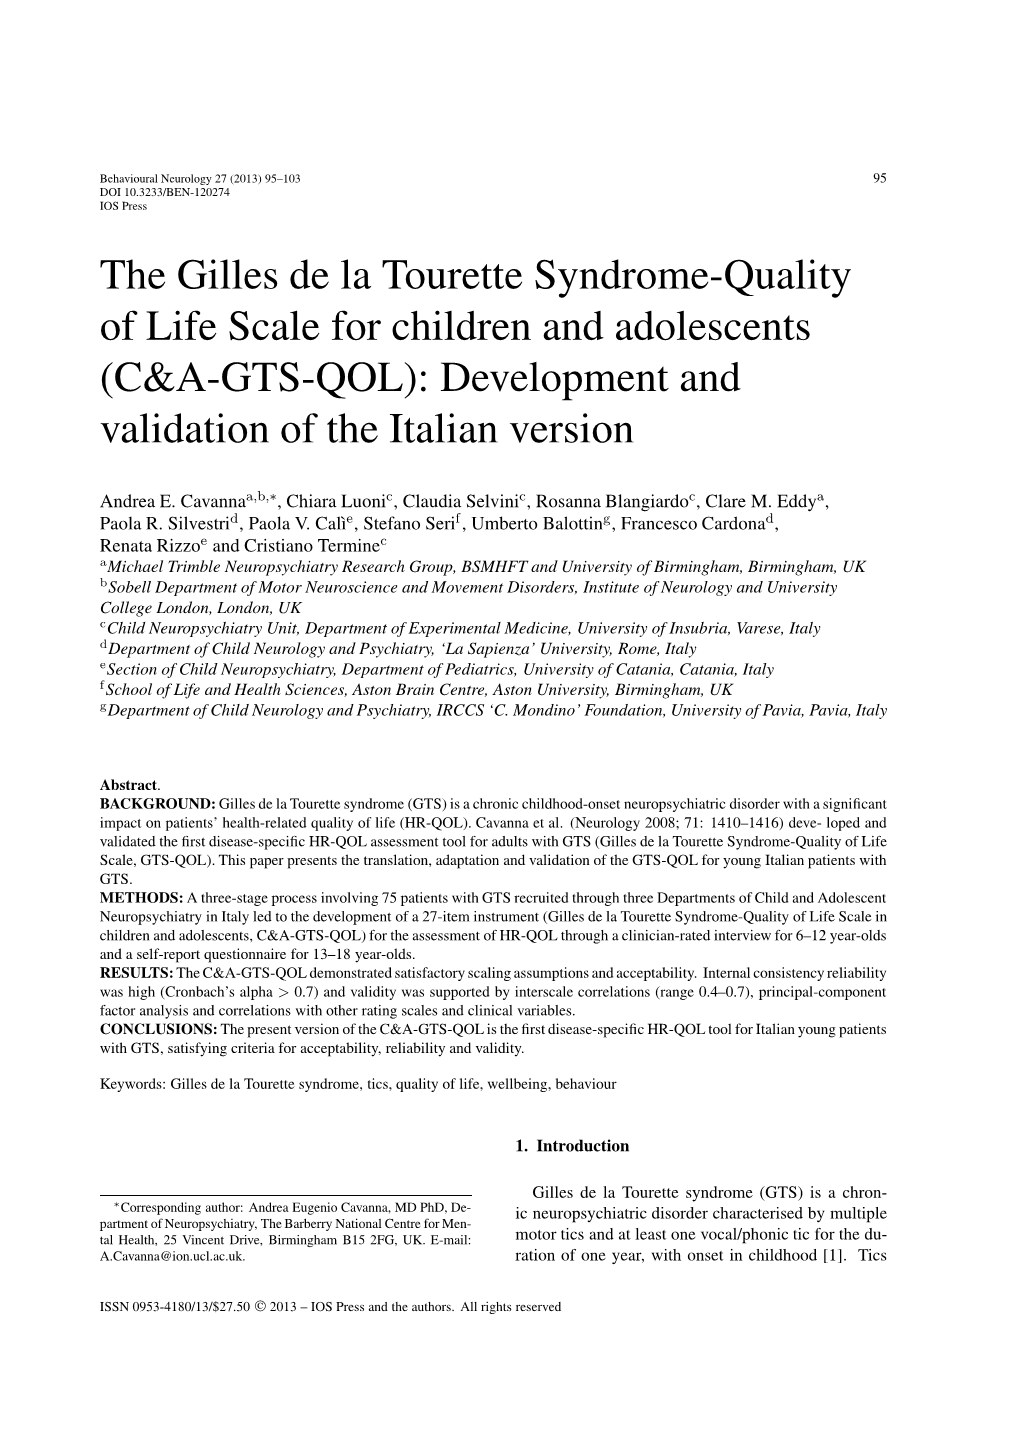 (C&A-GTS-QOL): Development and Validation of the Italian Version